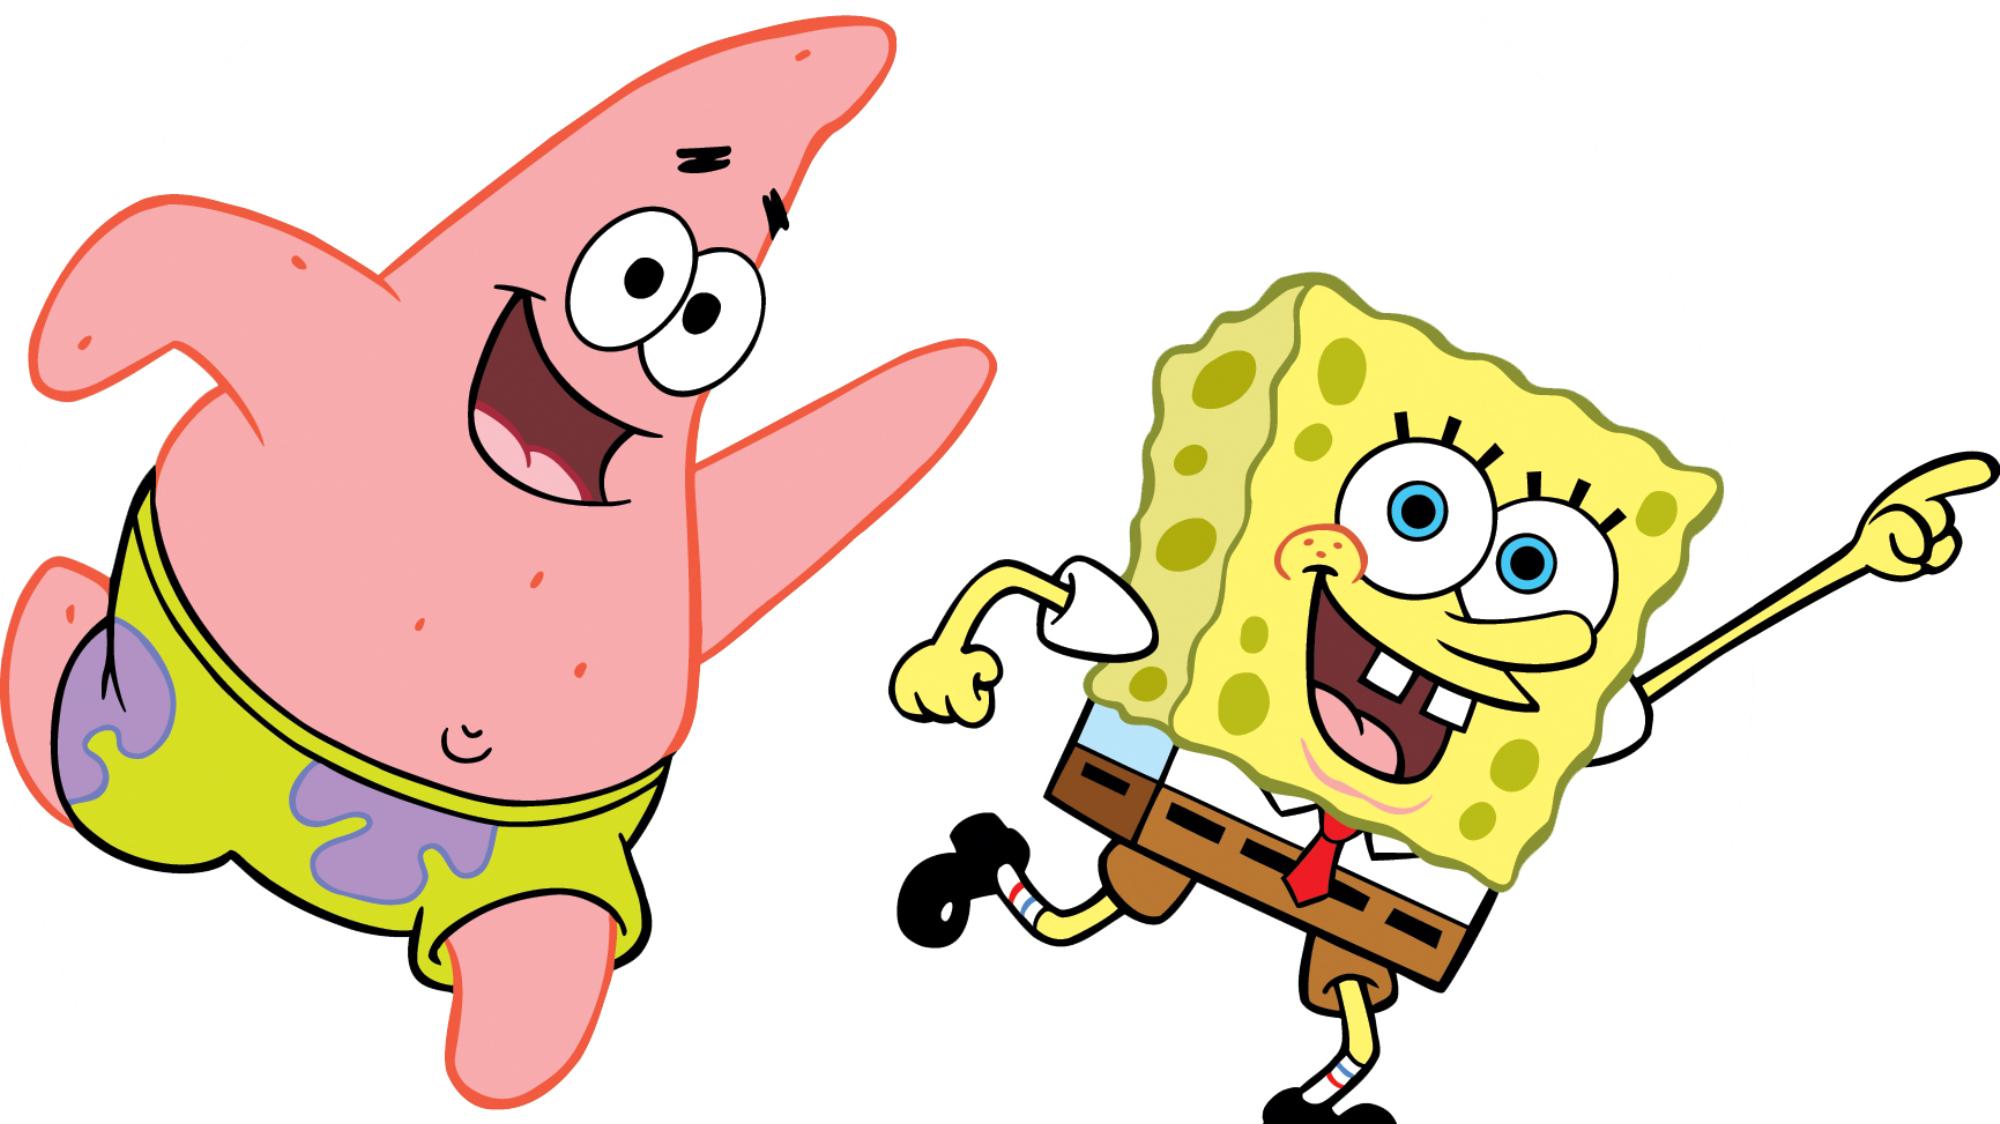 Amazing Spongebob Squarepants Pictures & Backgrounds